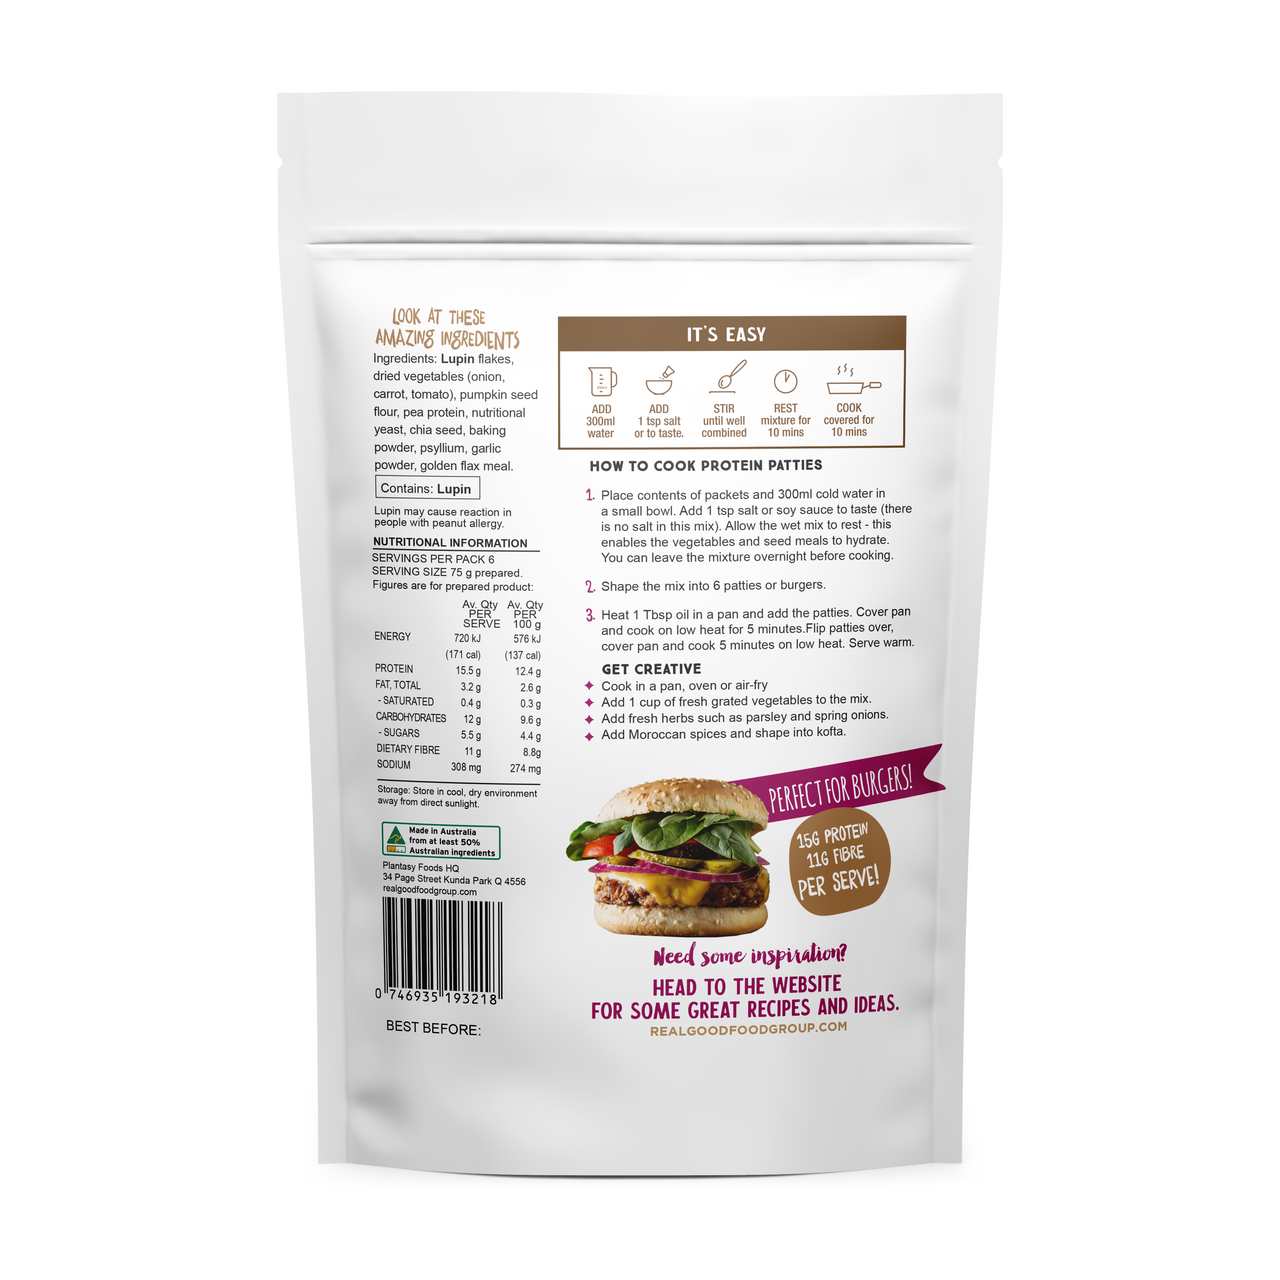 Plantasy Foods Vegan Protein Patty Mix - Original